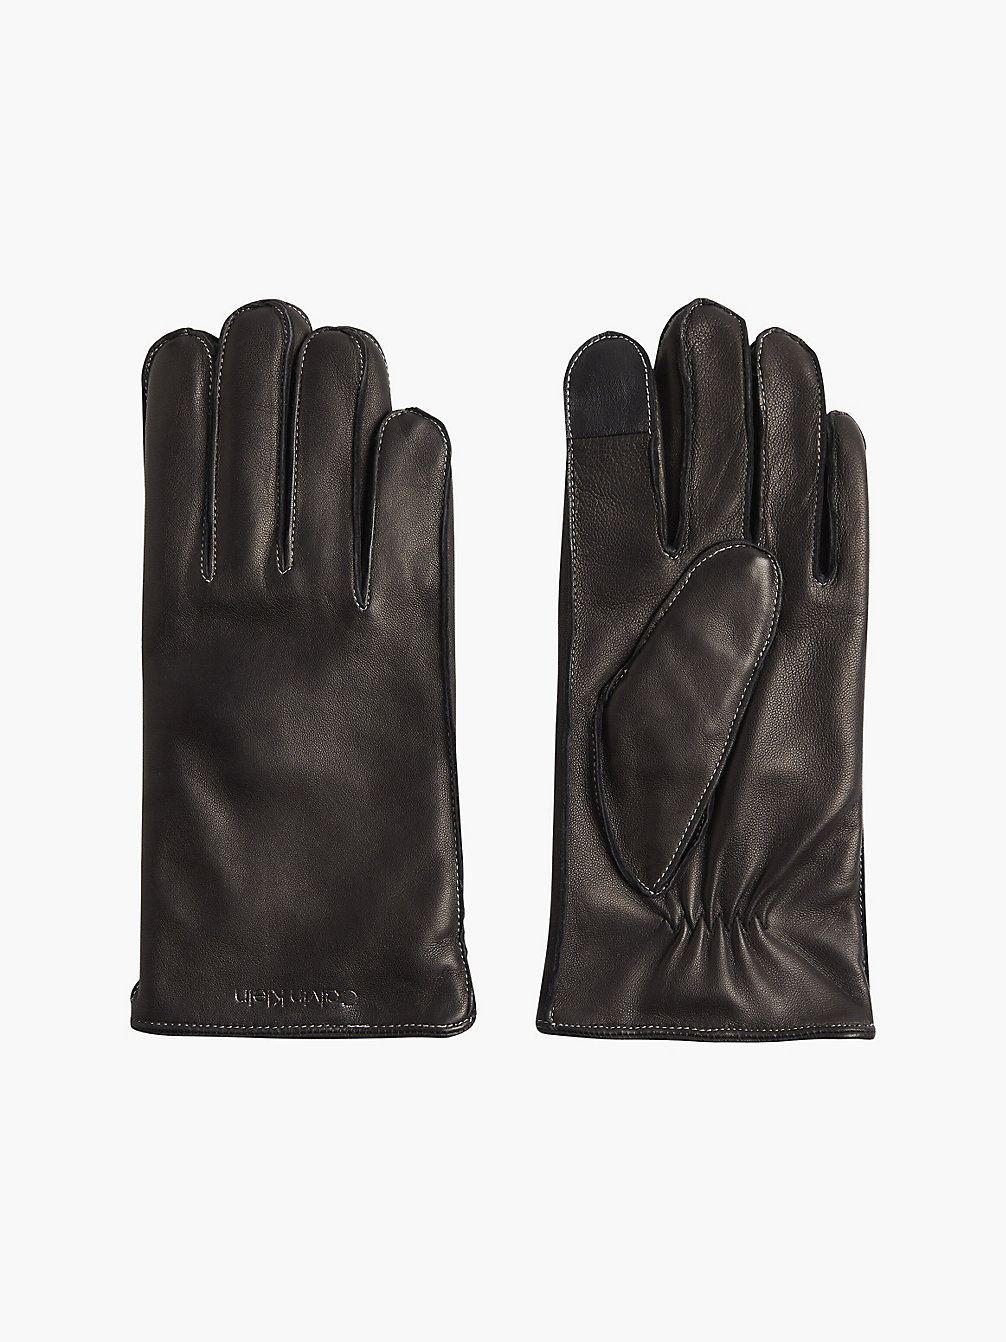 CK BLACK Leather Gloves undefined men Calvin Klein